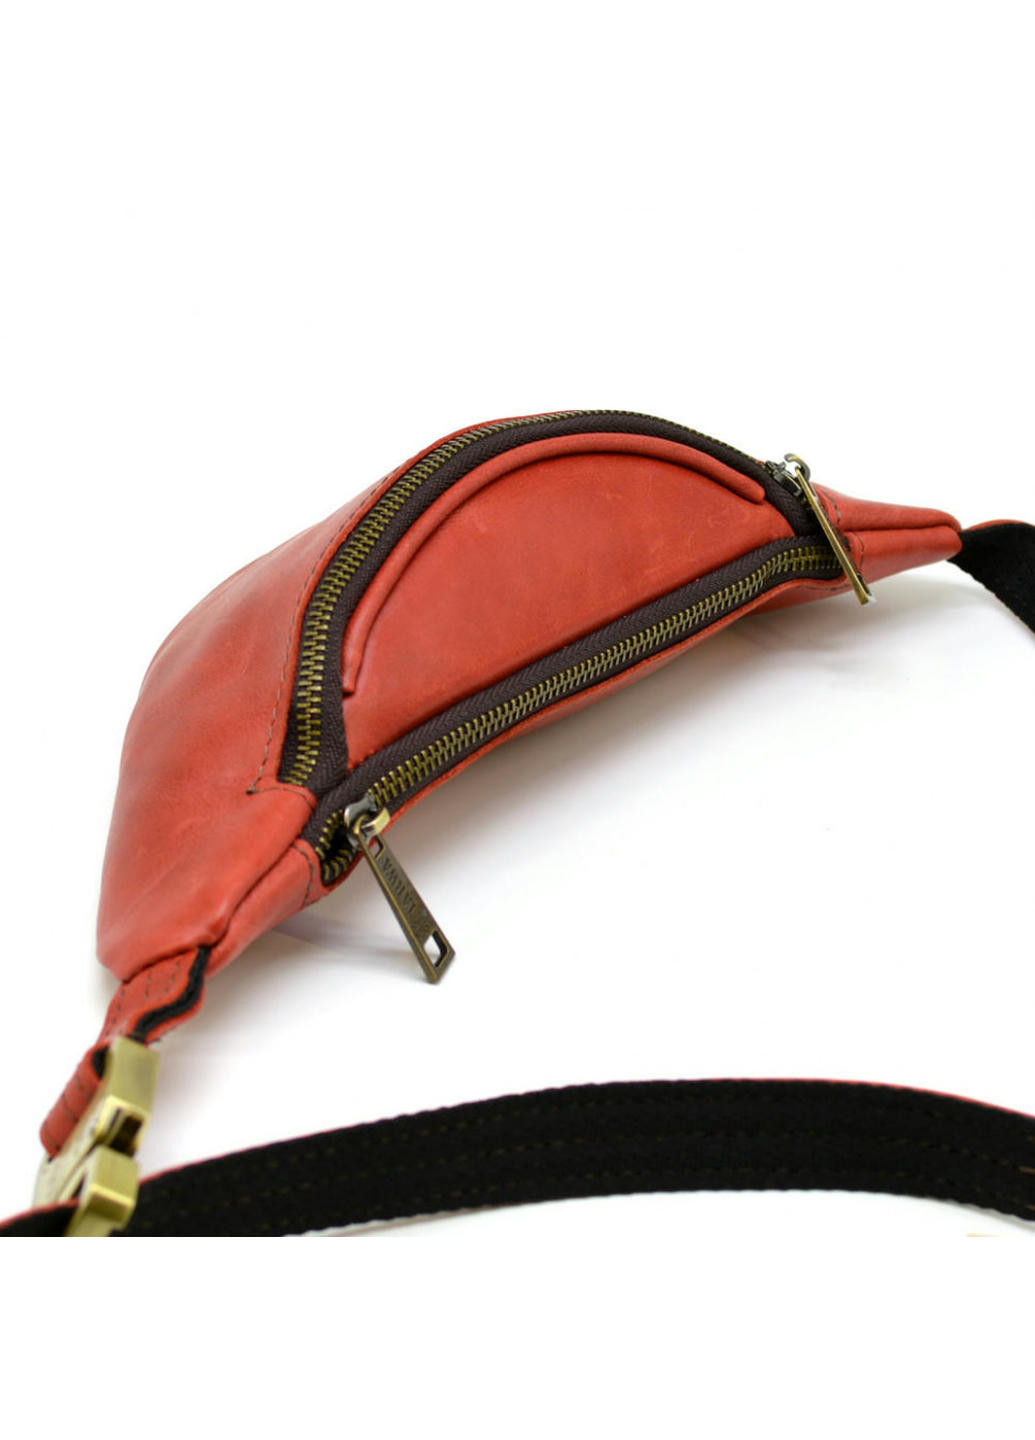 Красная напоясная маленькая сумка из натуральной кожи RR-3034-3md TARWA (257657156)